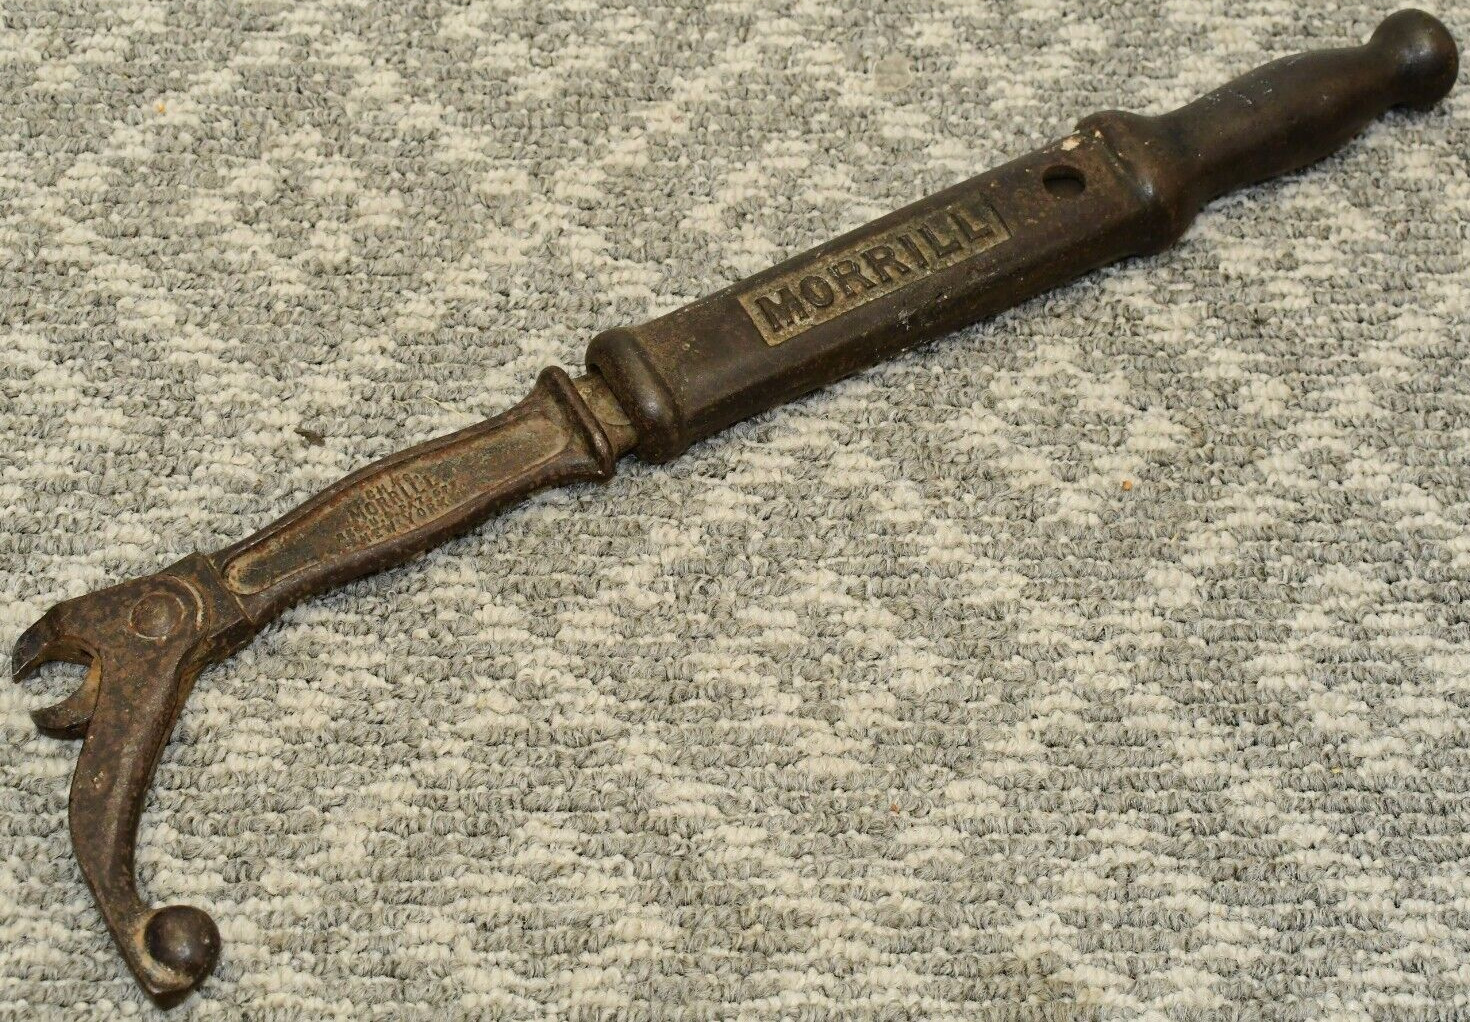 VTG Antique Nail Puller Morrill No.1 Cast Iron Slide Hammer Type Puller USA